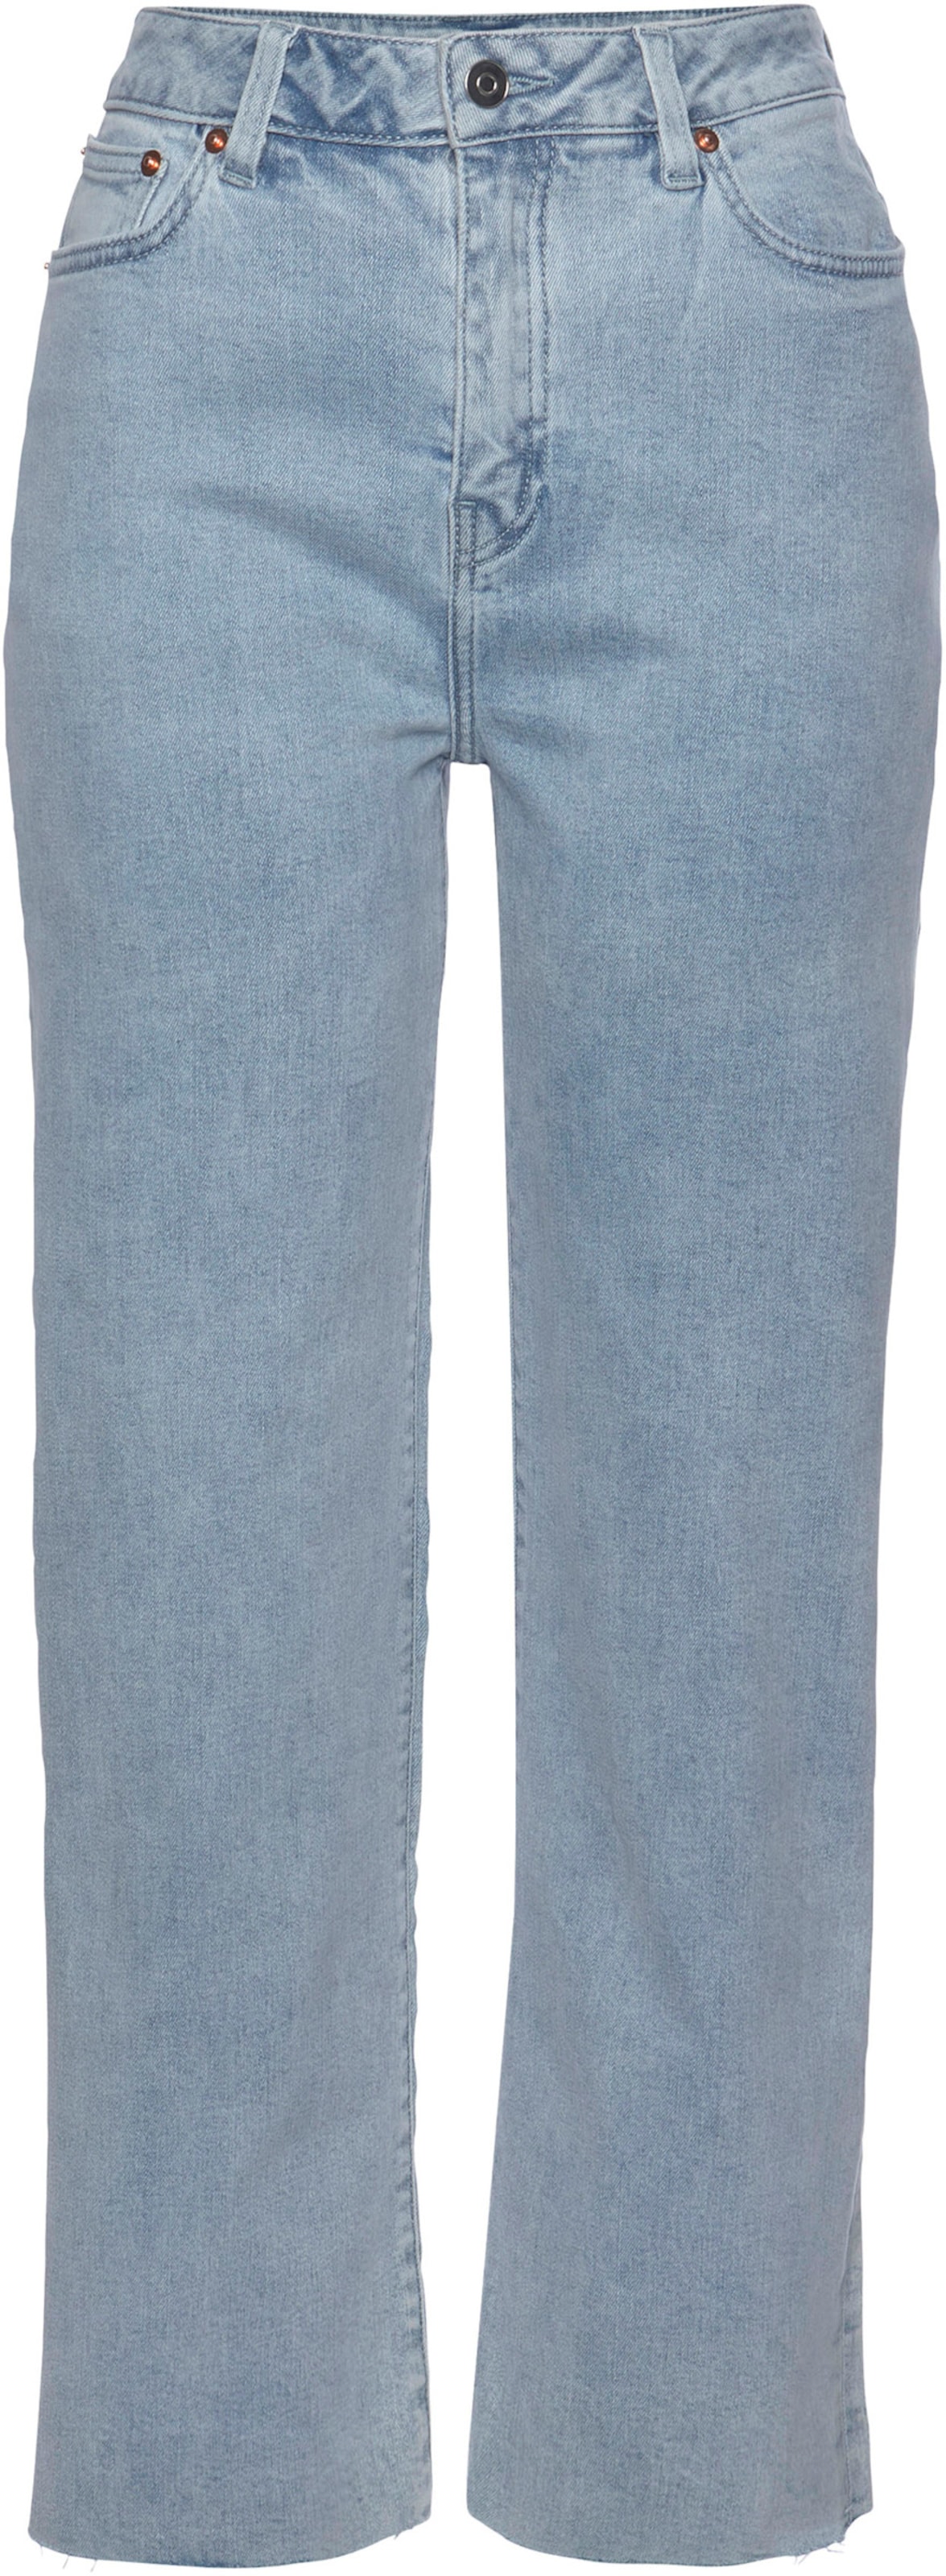 Weite Jeans in light-blue-washed von Buffalo